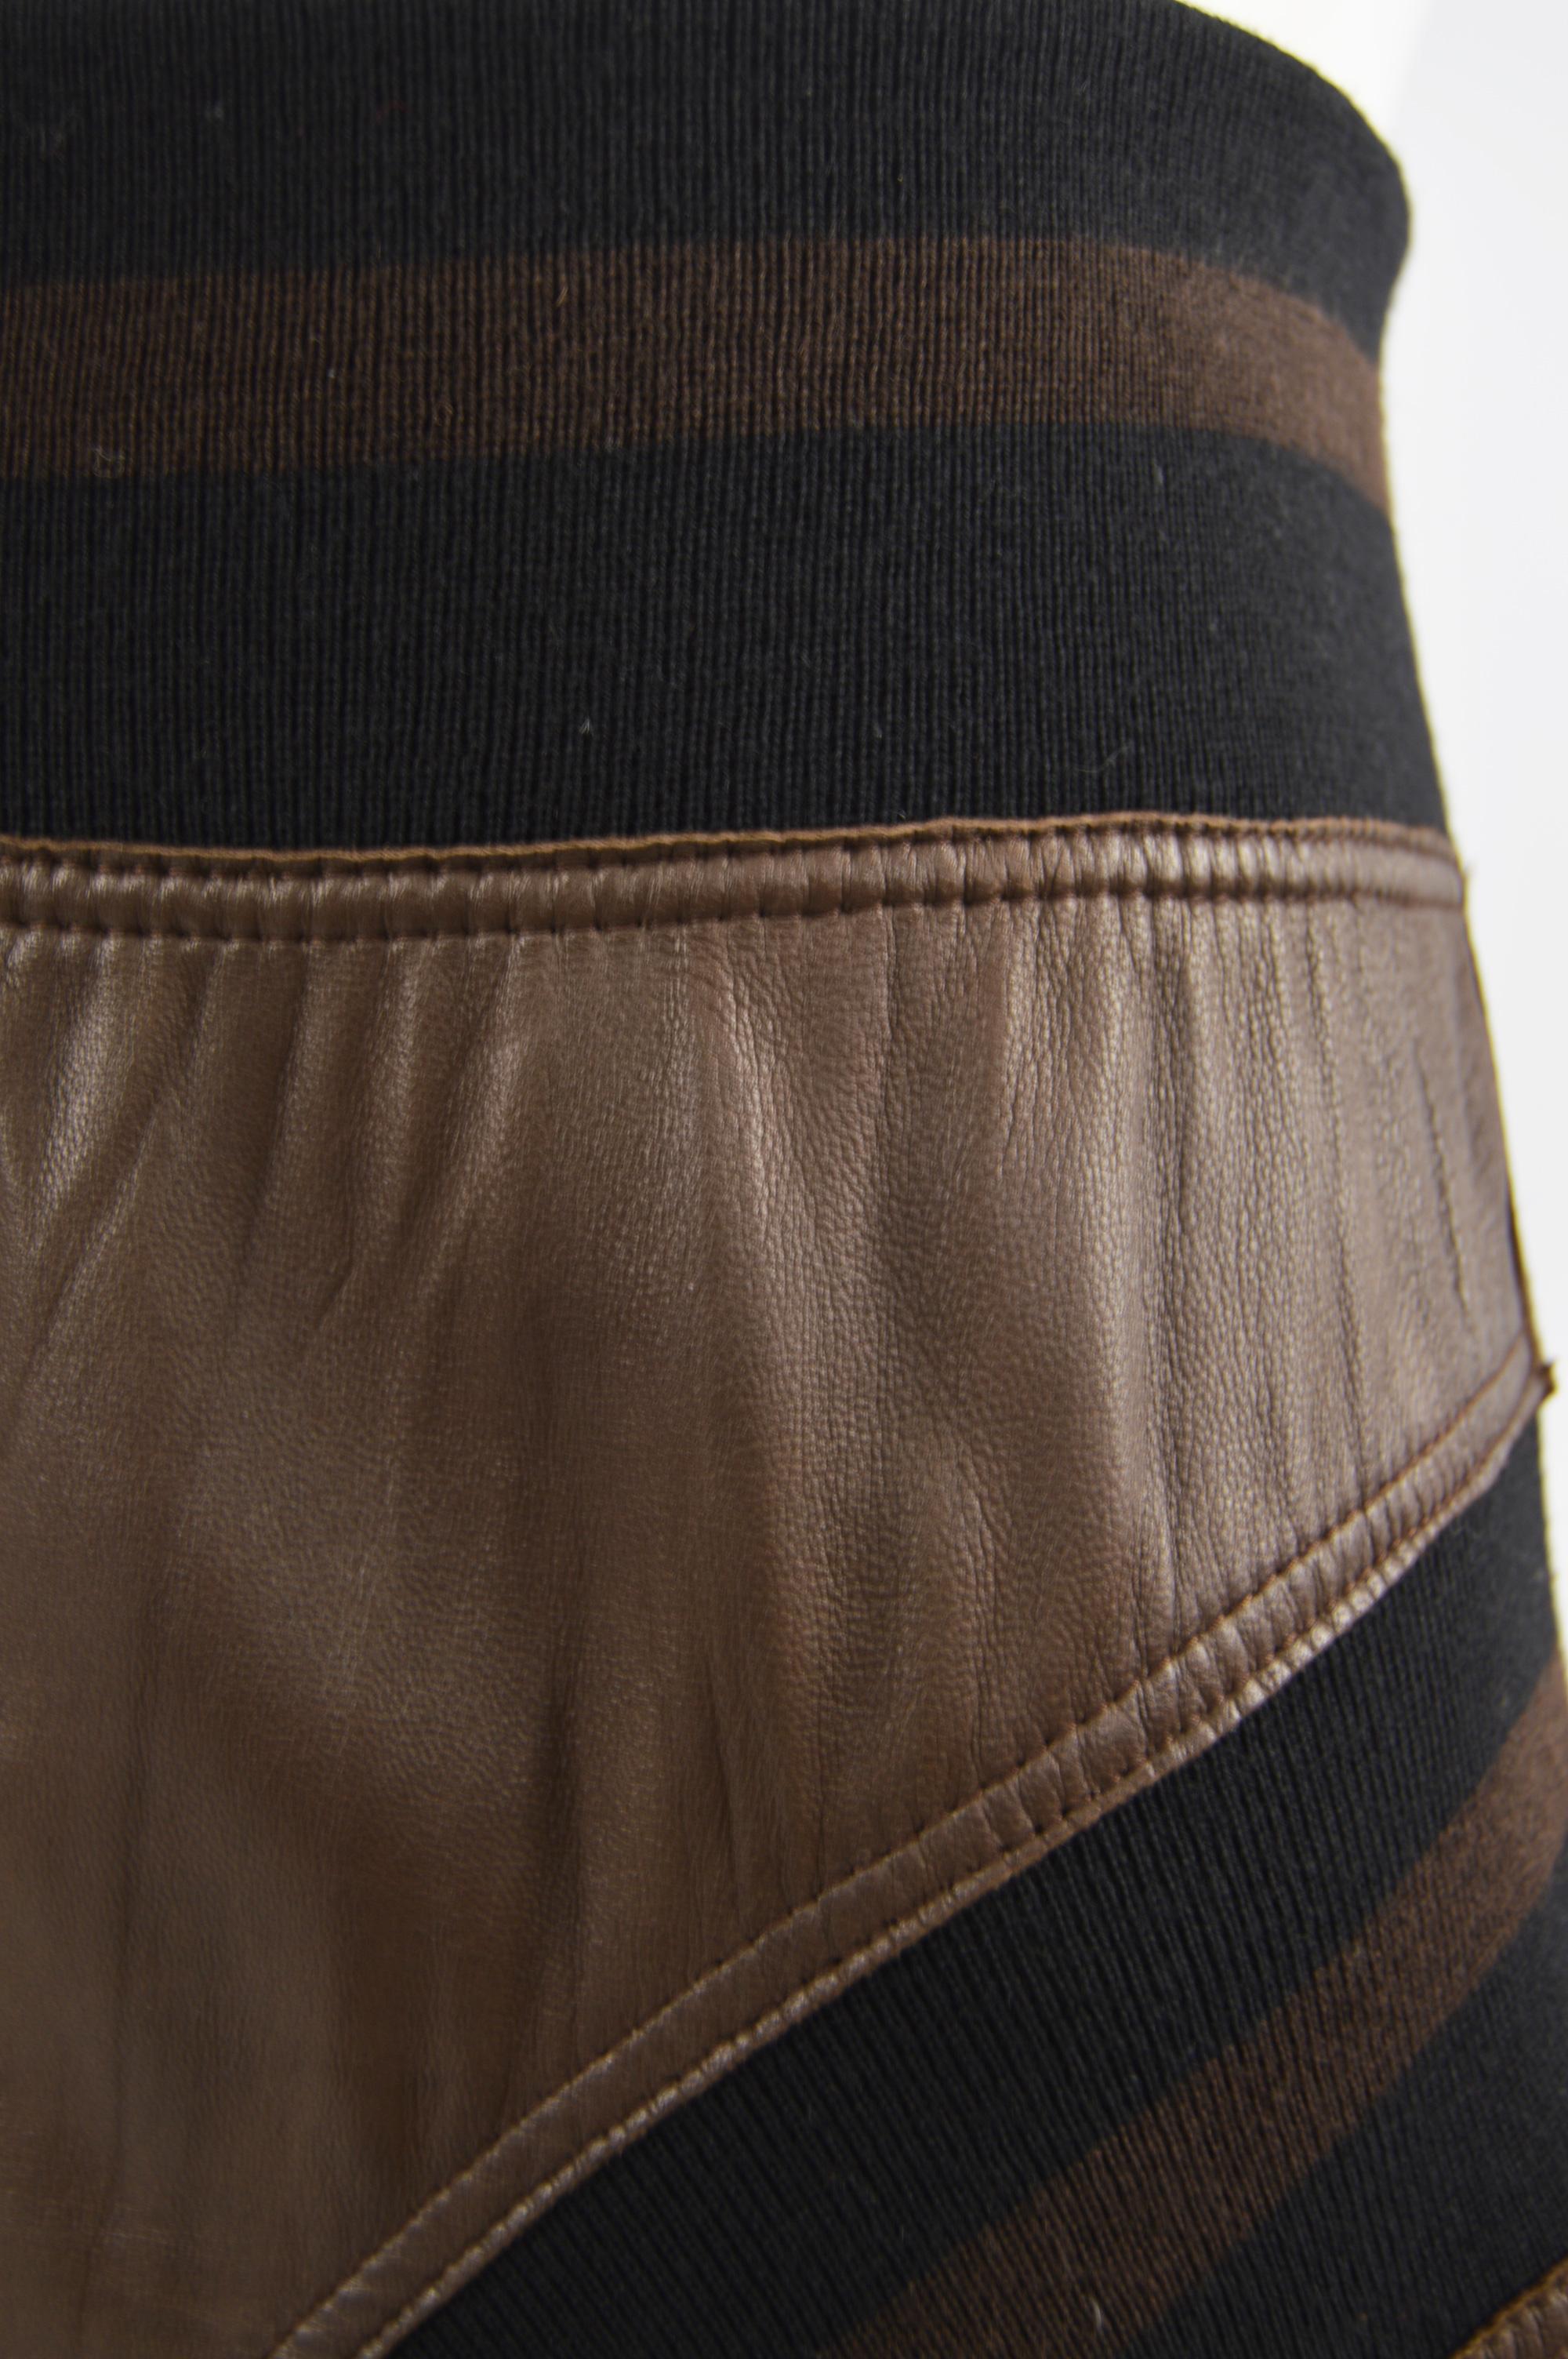 Black Jean Paul Gaultier Sheepskin Leather Vintage Skirt